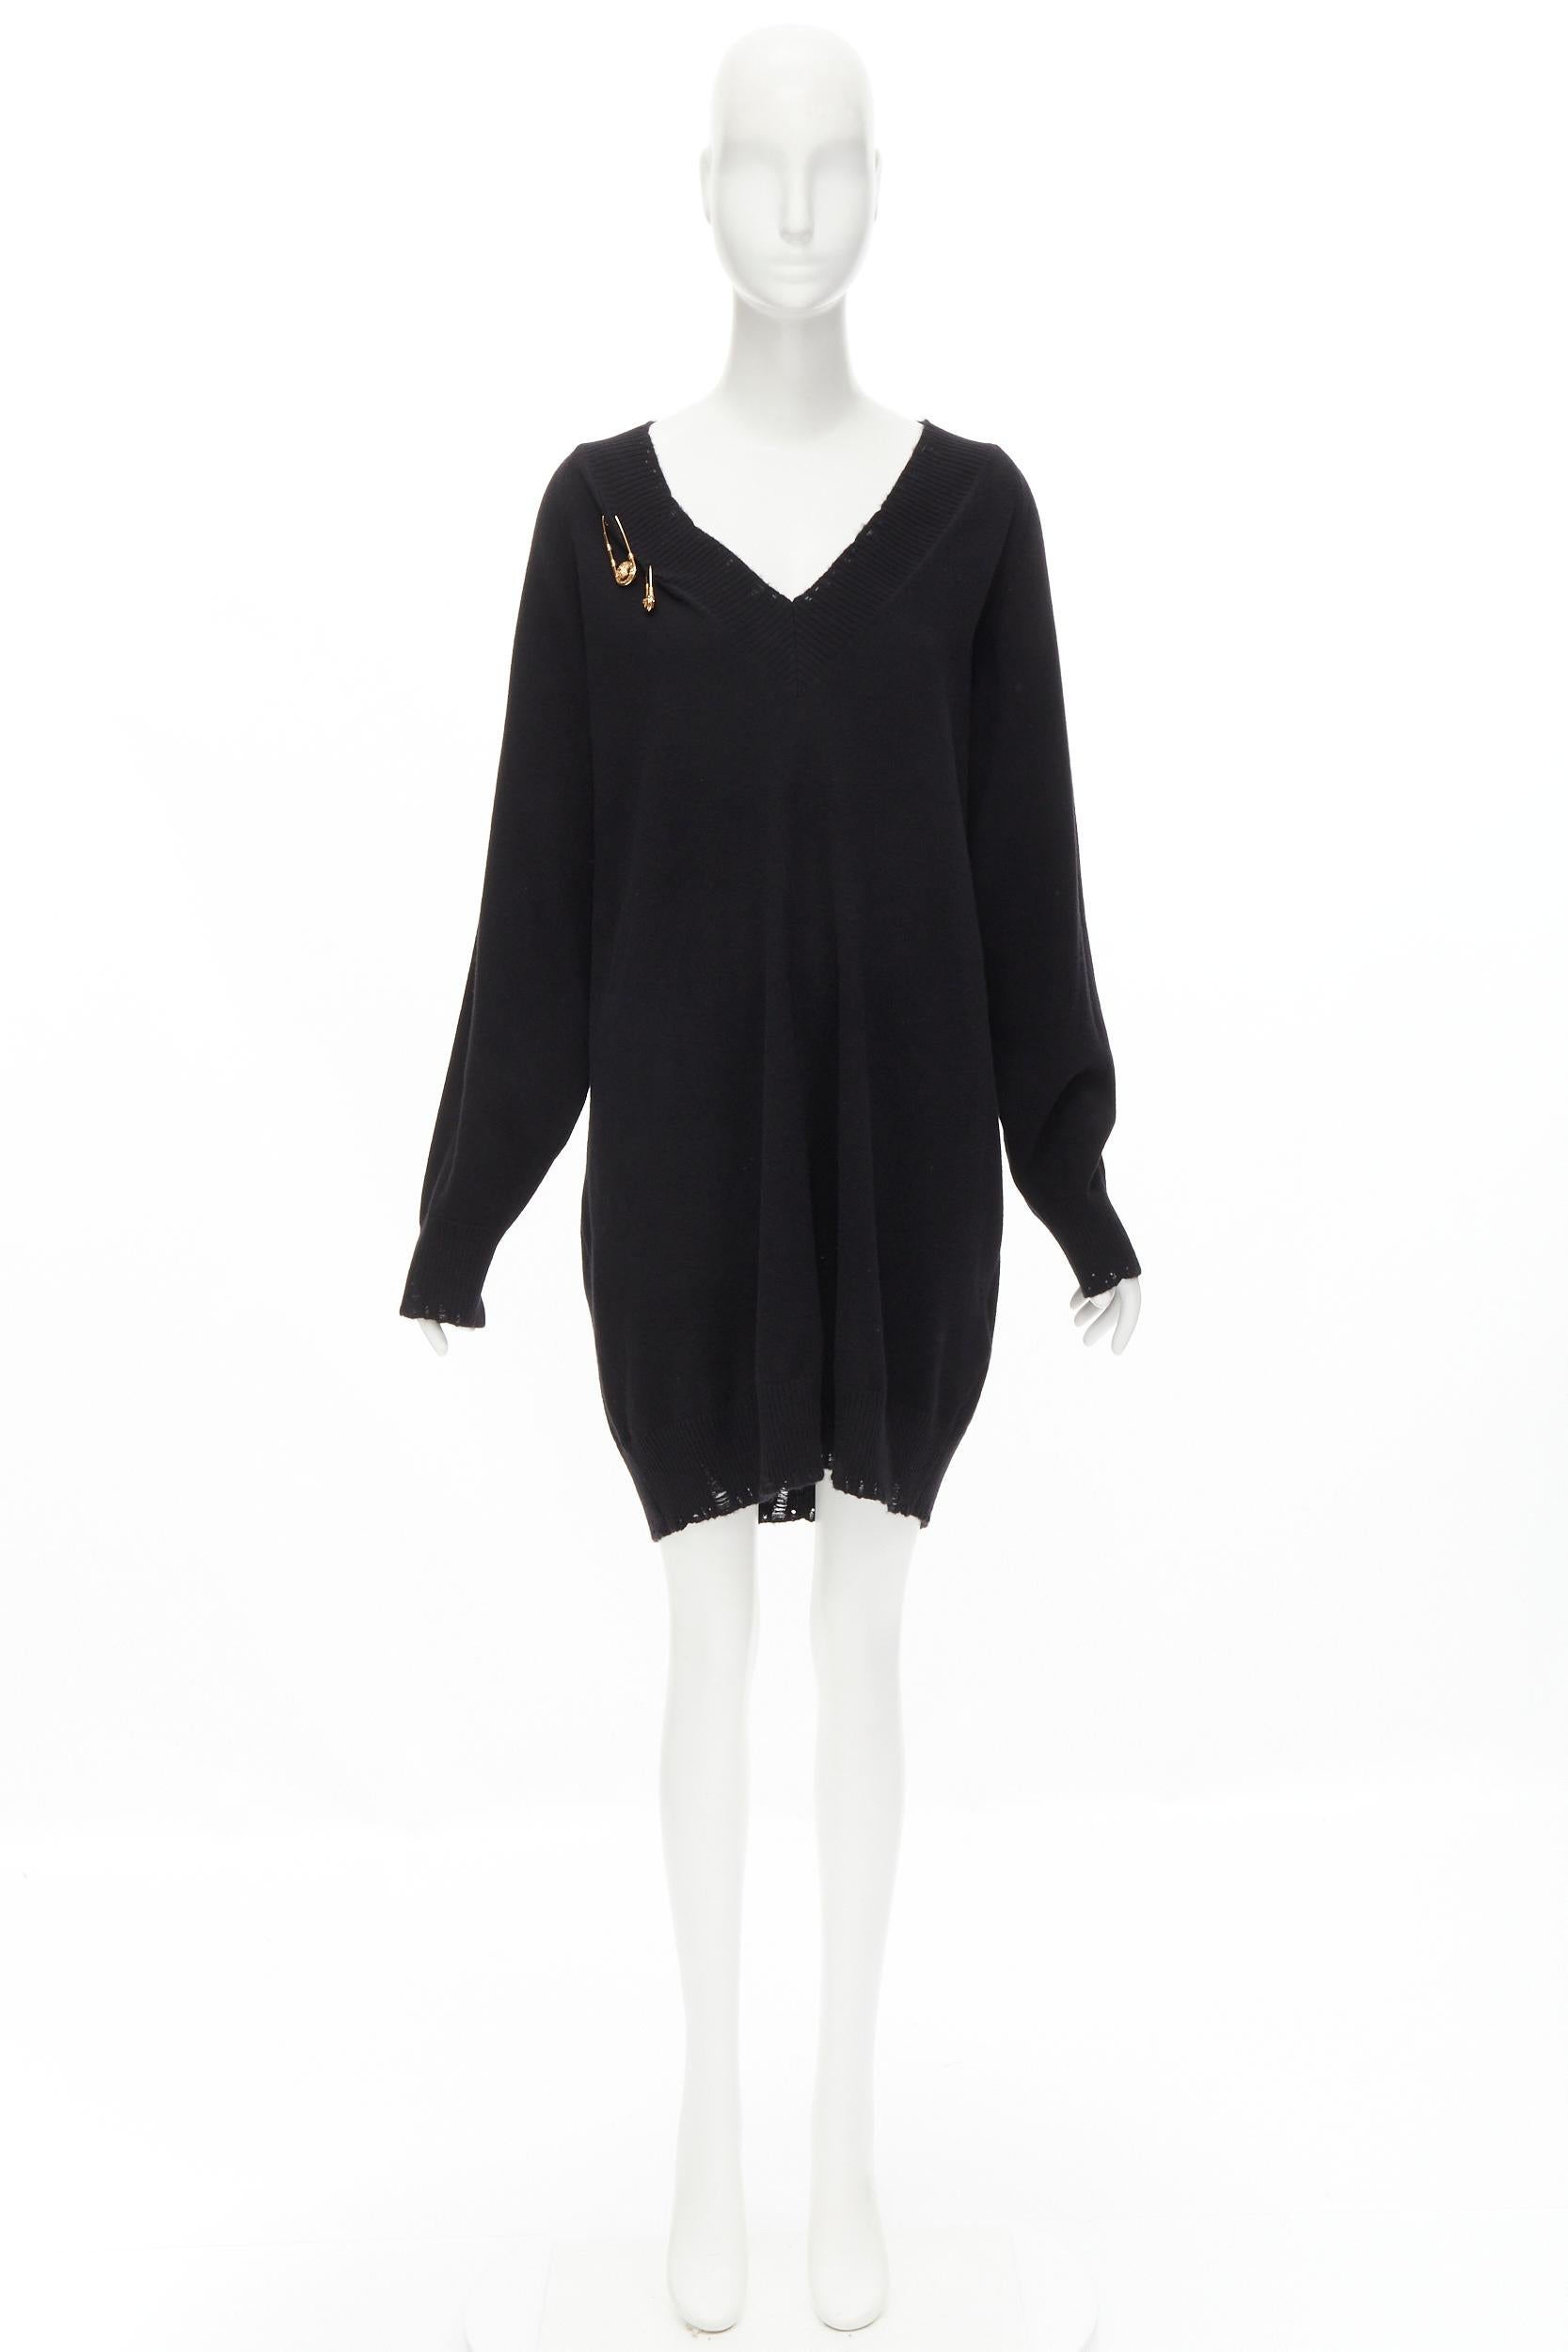 Women's new VERSACE 95% cashmere wool gold Medusa safety pin punk sweater dress IT42 M